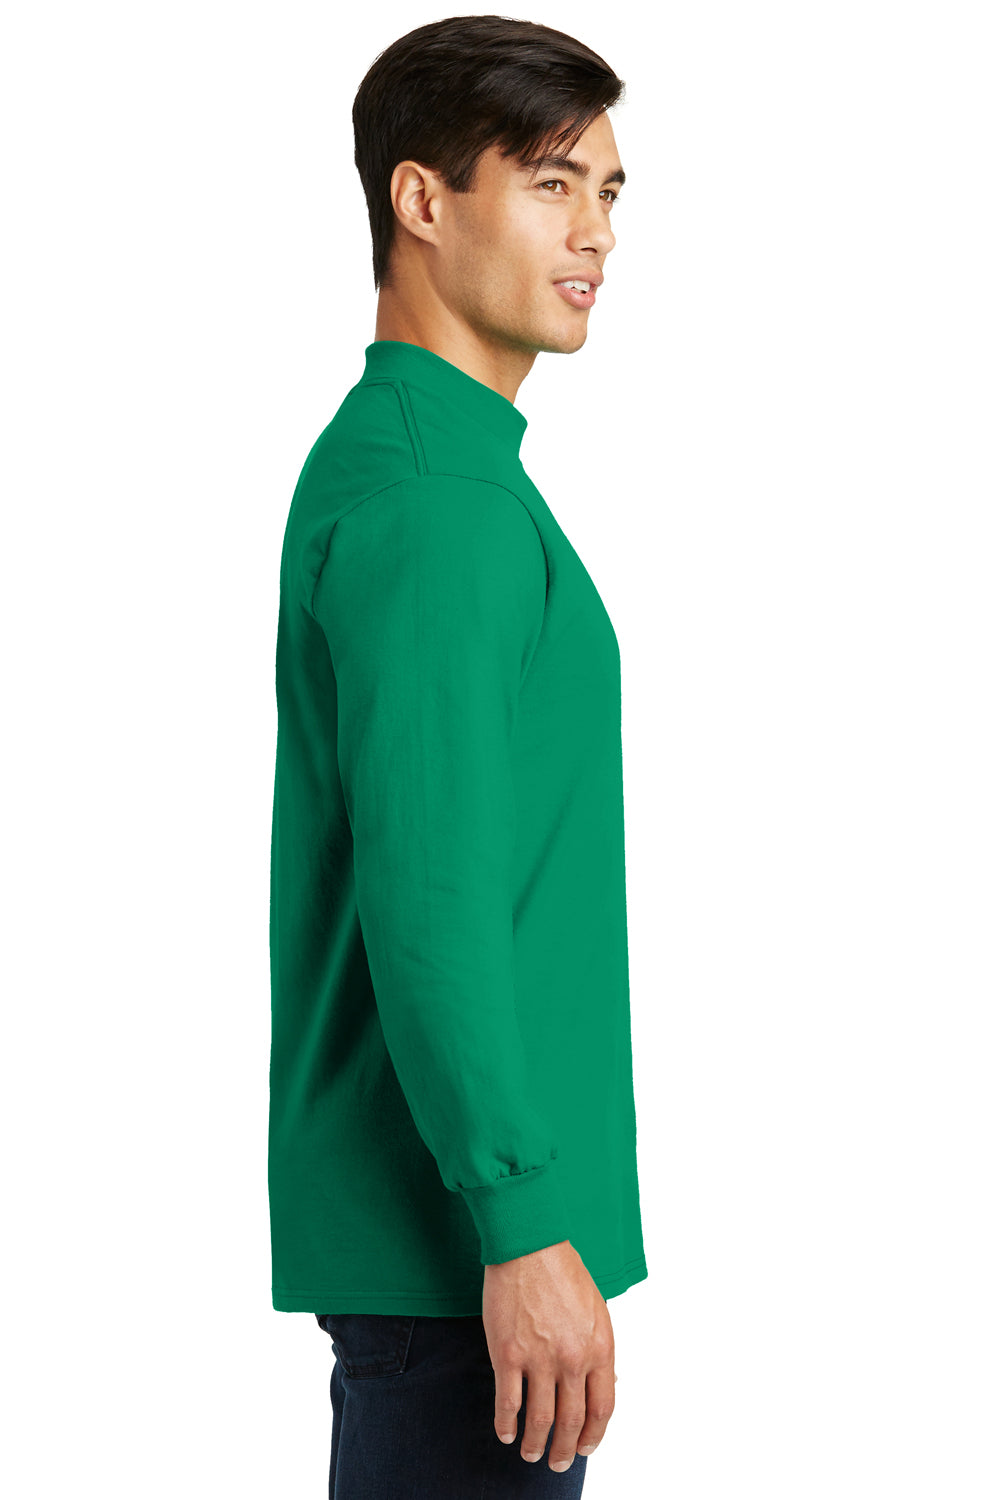 Port & Company PC61M Mens Essential Long Sleeve Mock Neck T-Shirt Kelly Green Side